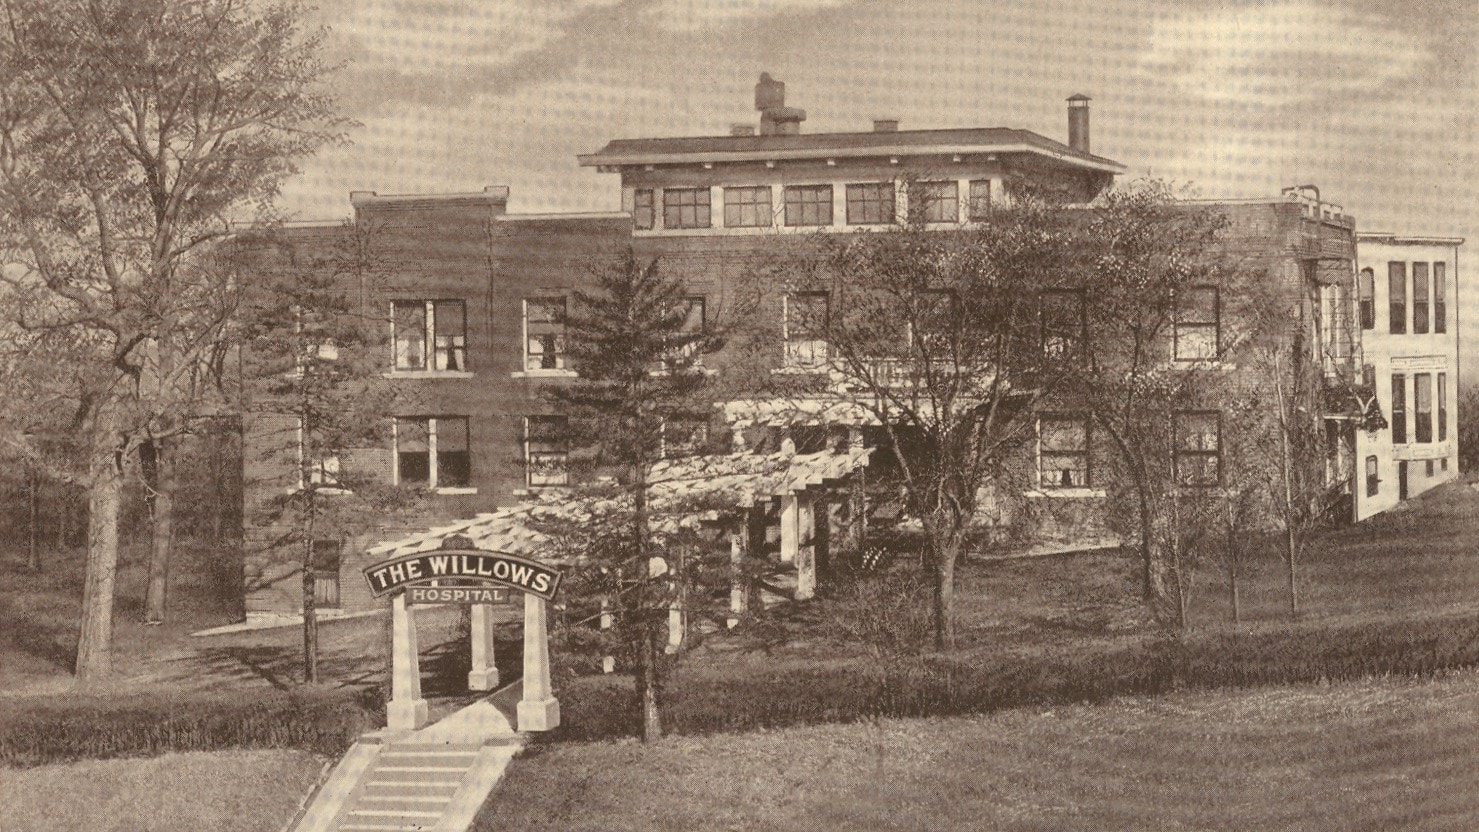 The Willows Maternity Sanitarium at 2929 Main St. in 1921.